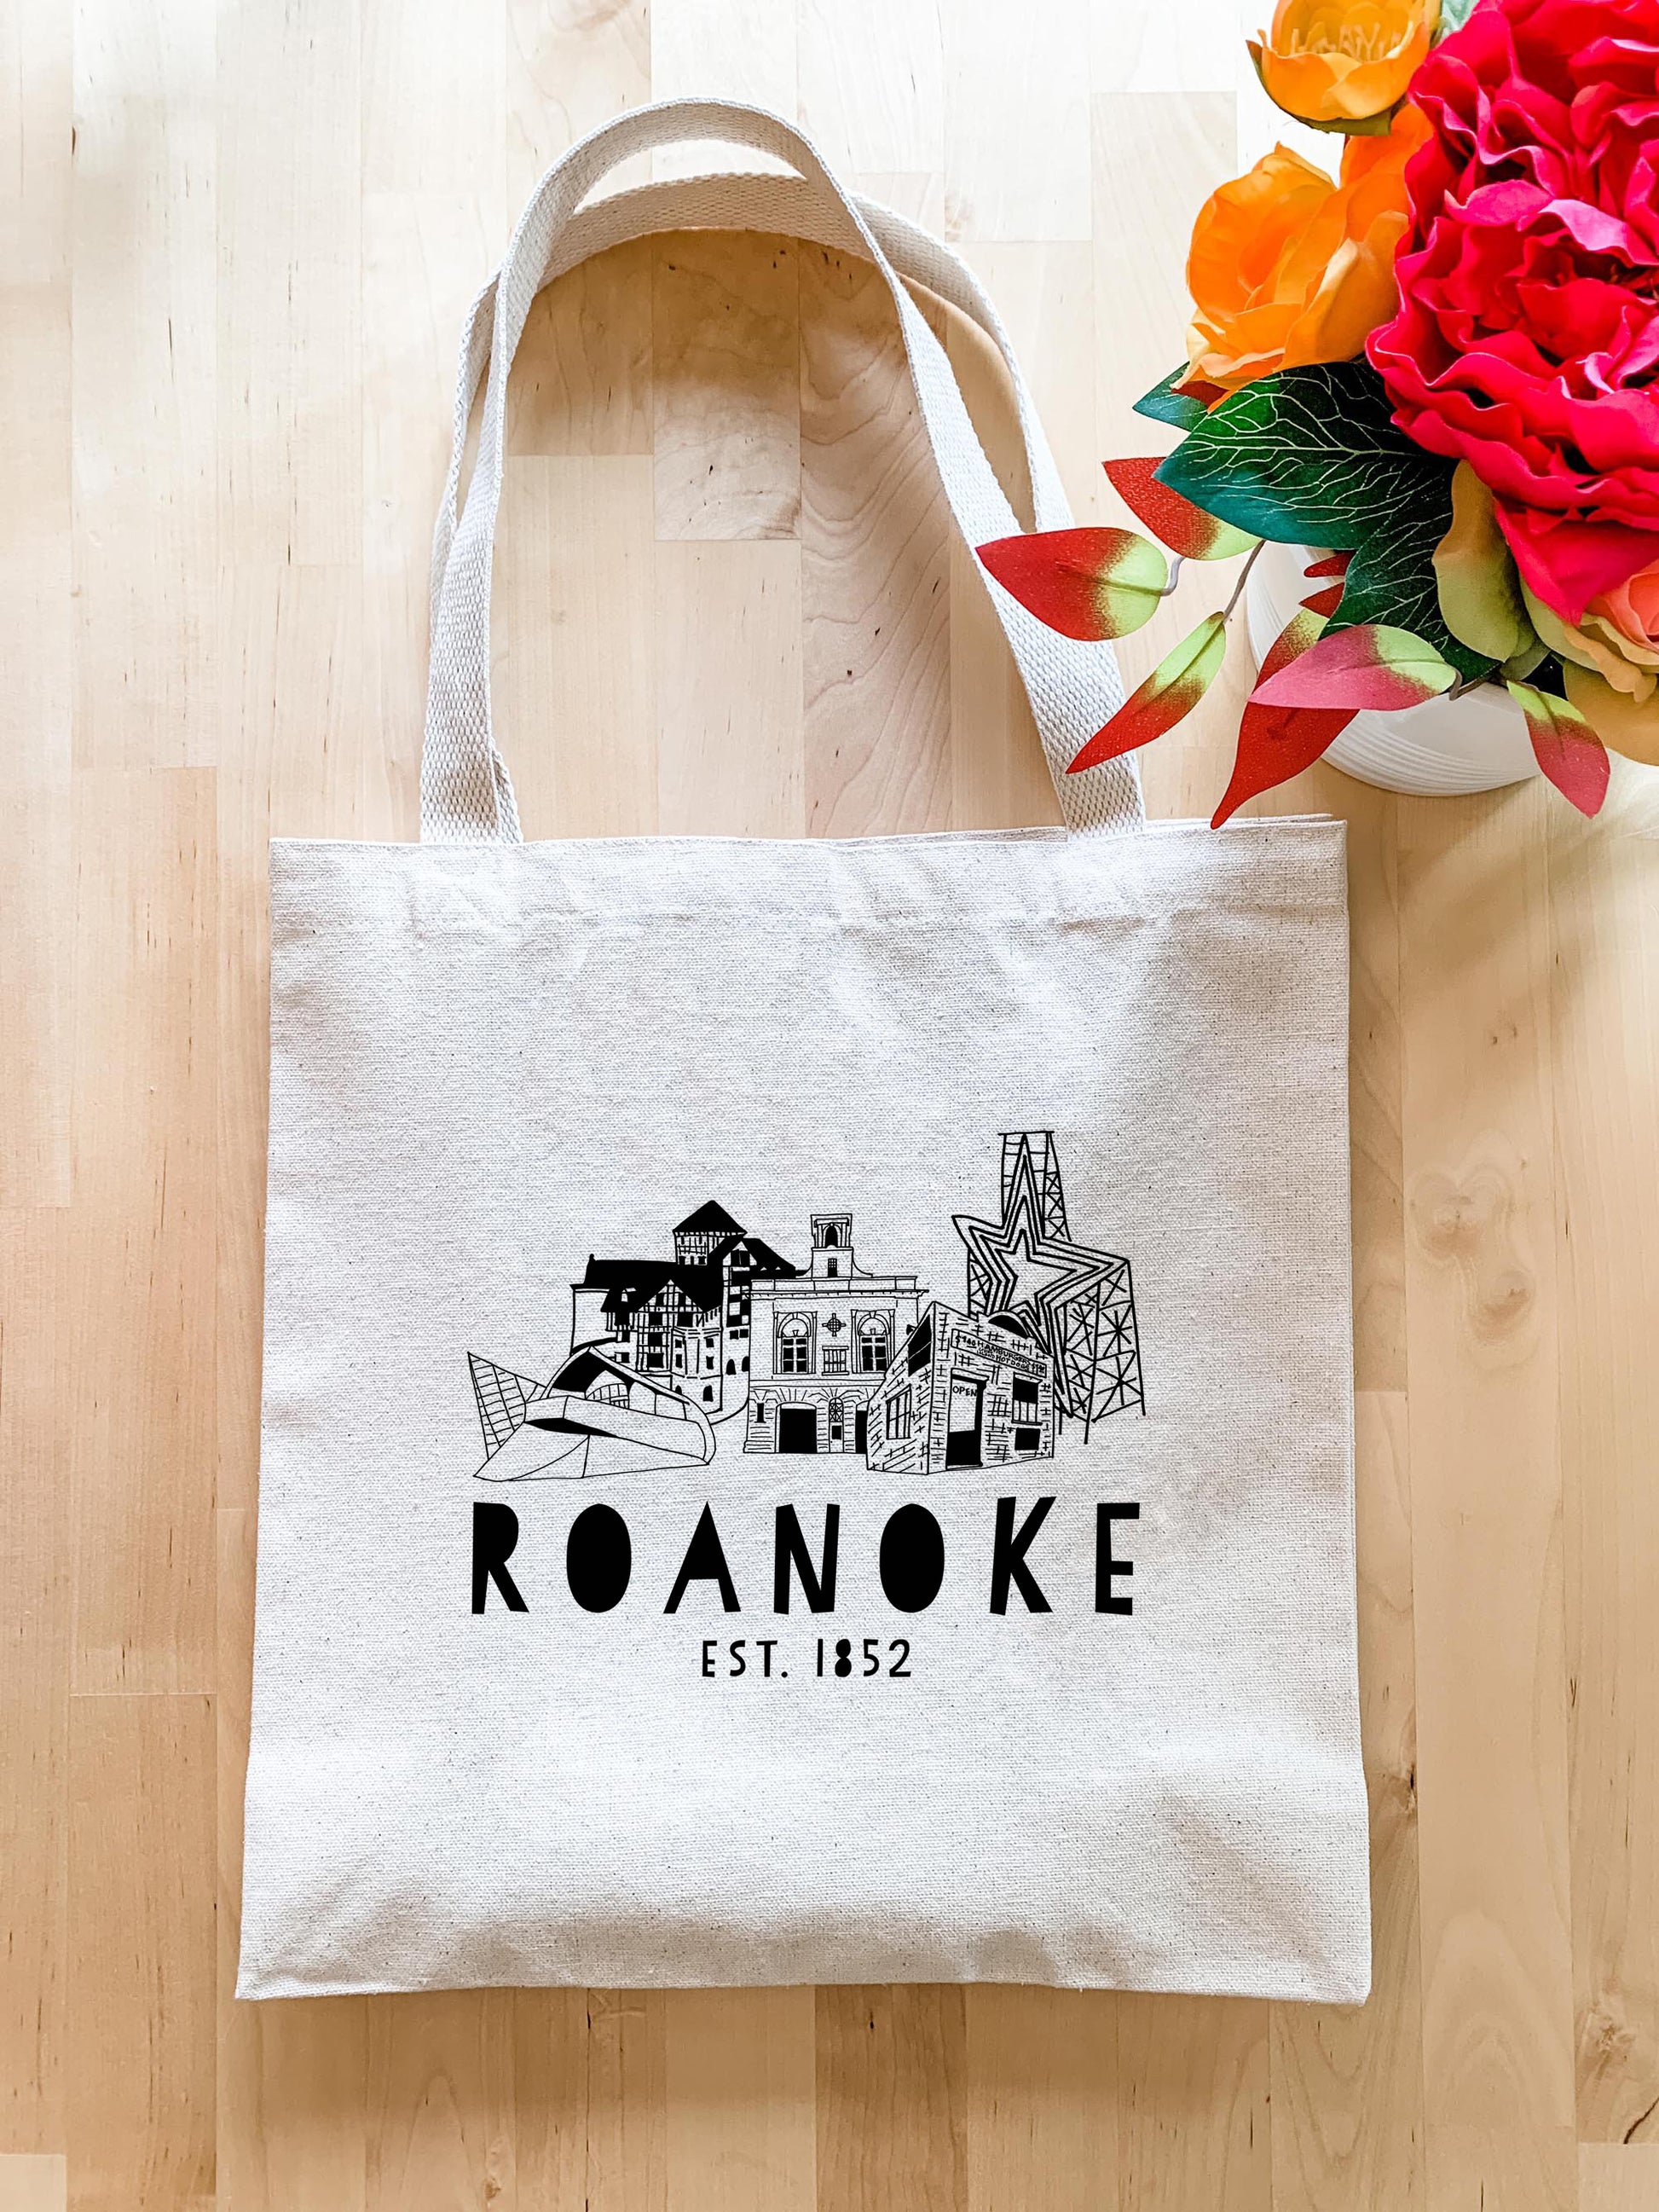 Roanoke, Virginia (VA) - Tote Bag - MoonlightMakers